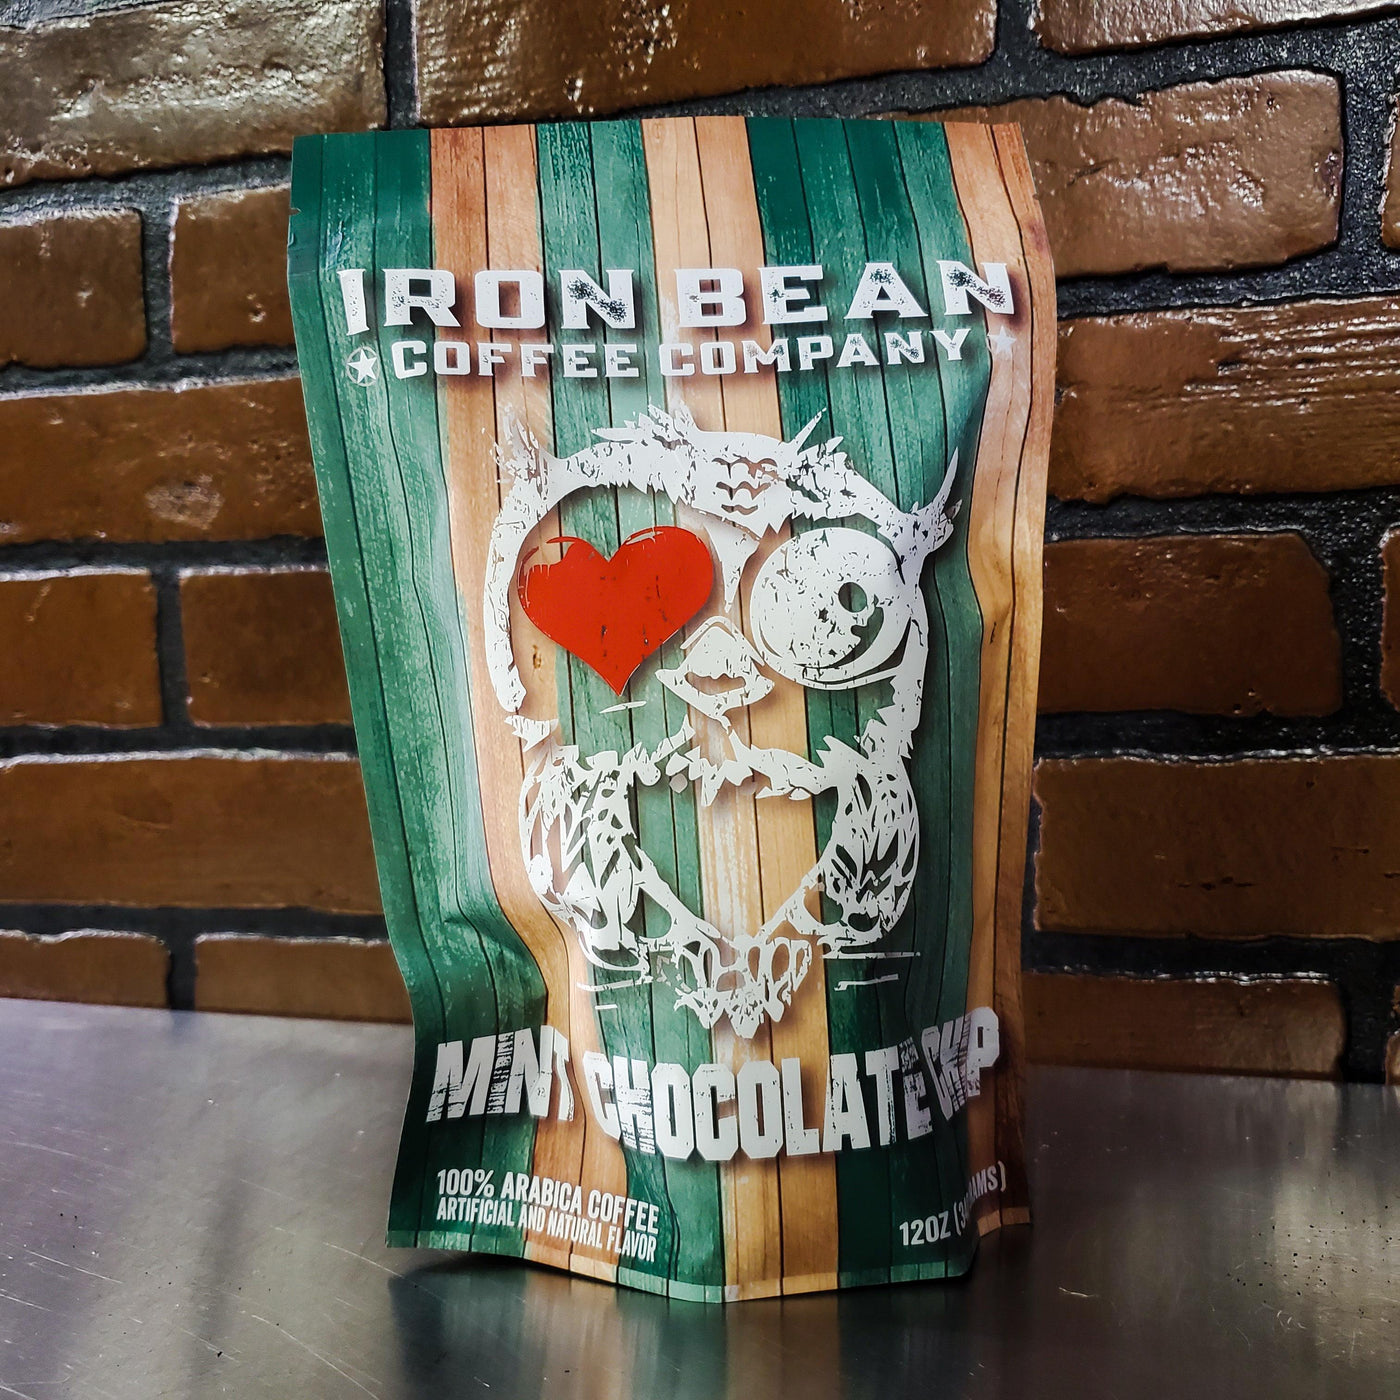 Mint Chocolate Chip - 12oz - Iron Bean Coffee Company